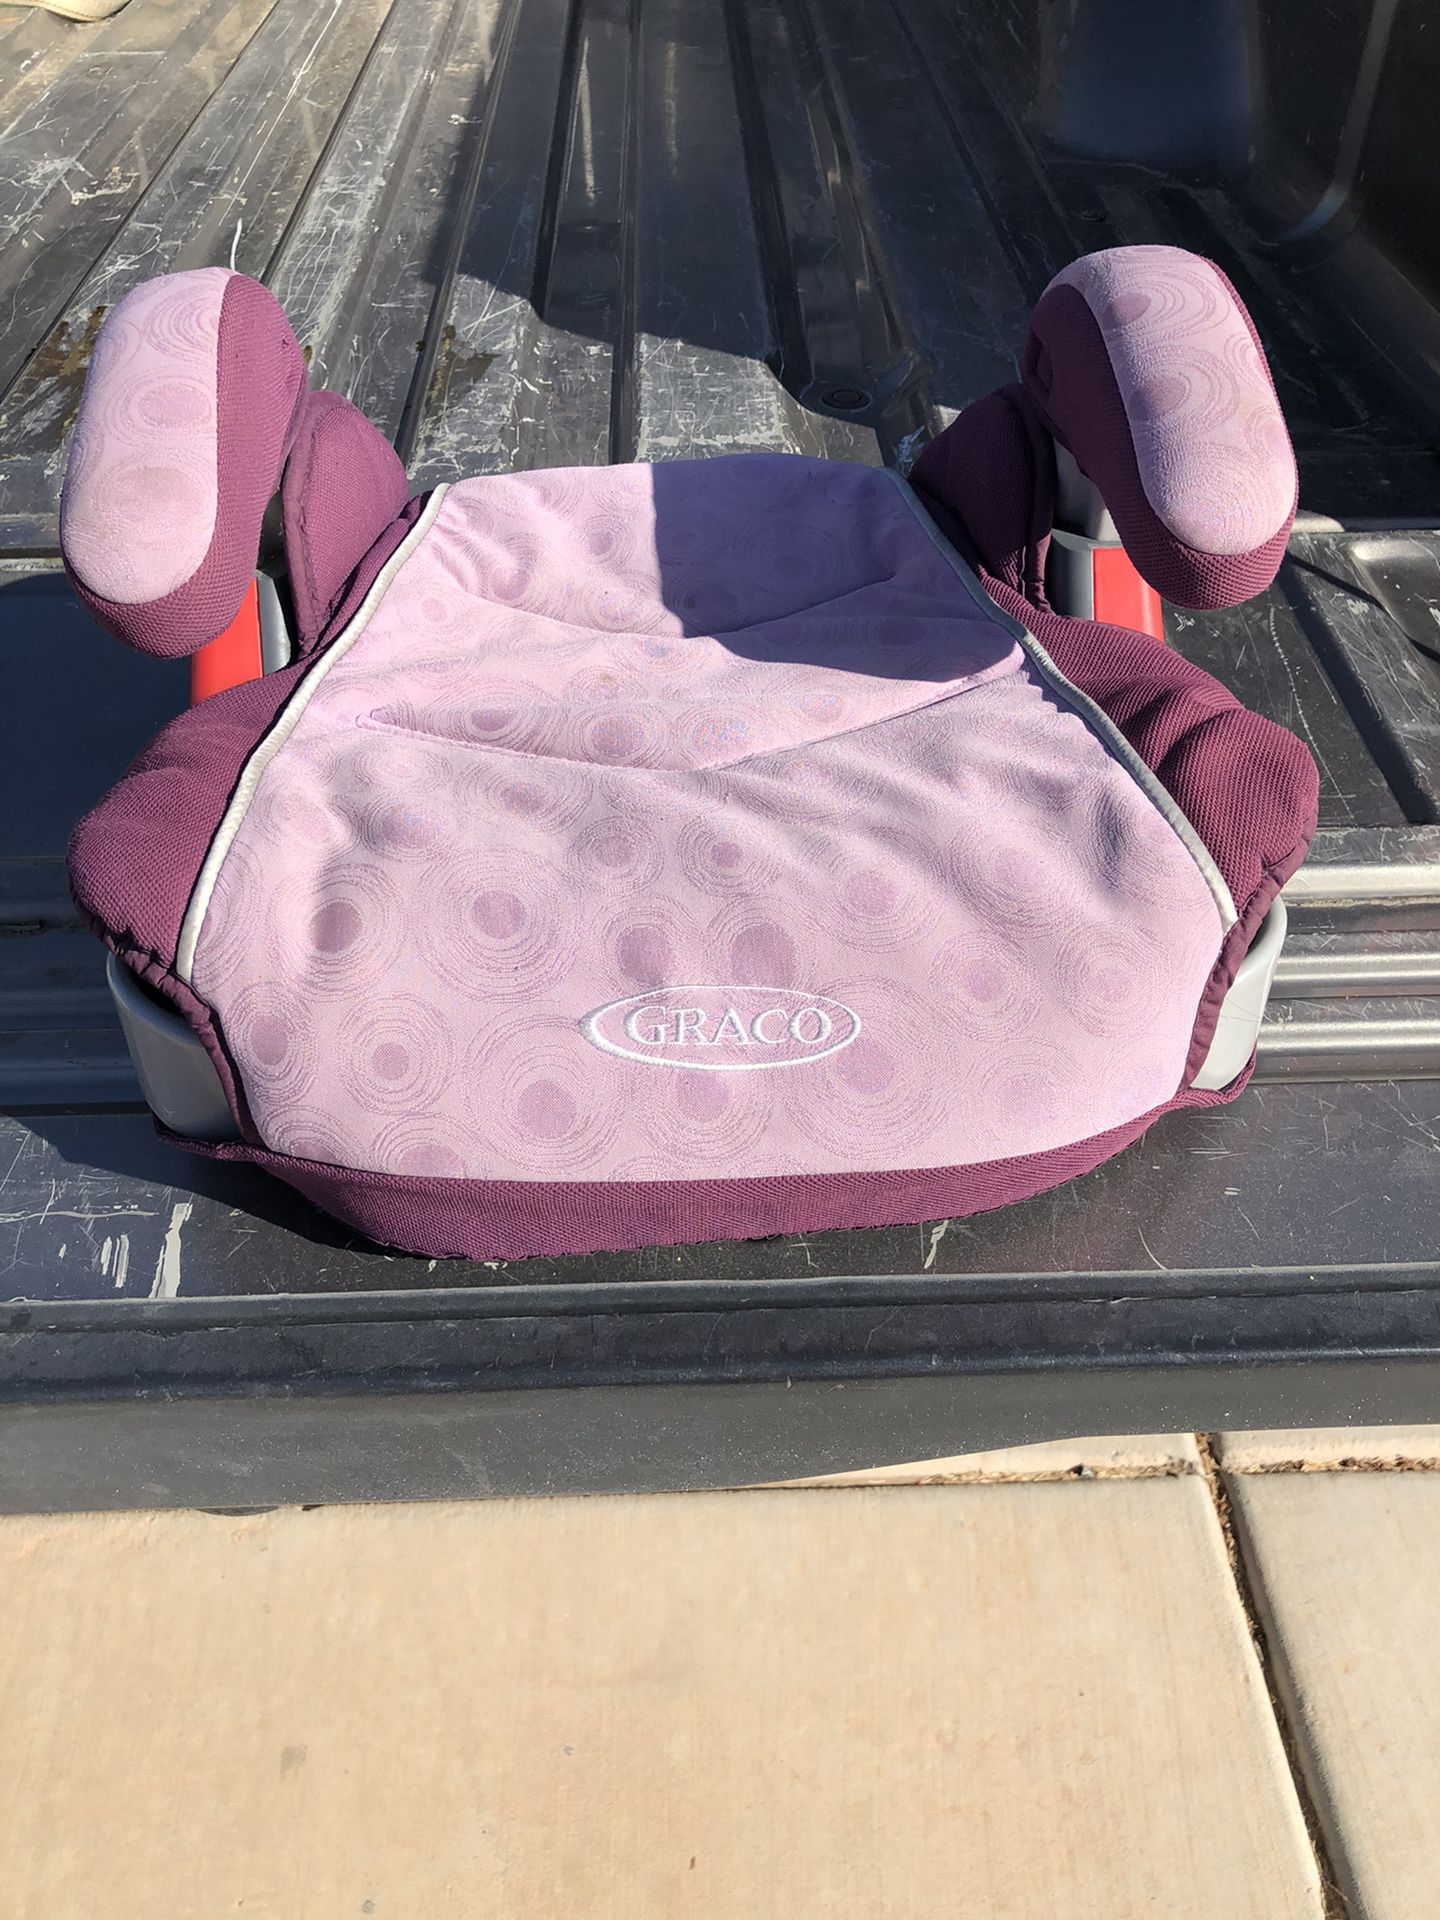 Kids booster car seat